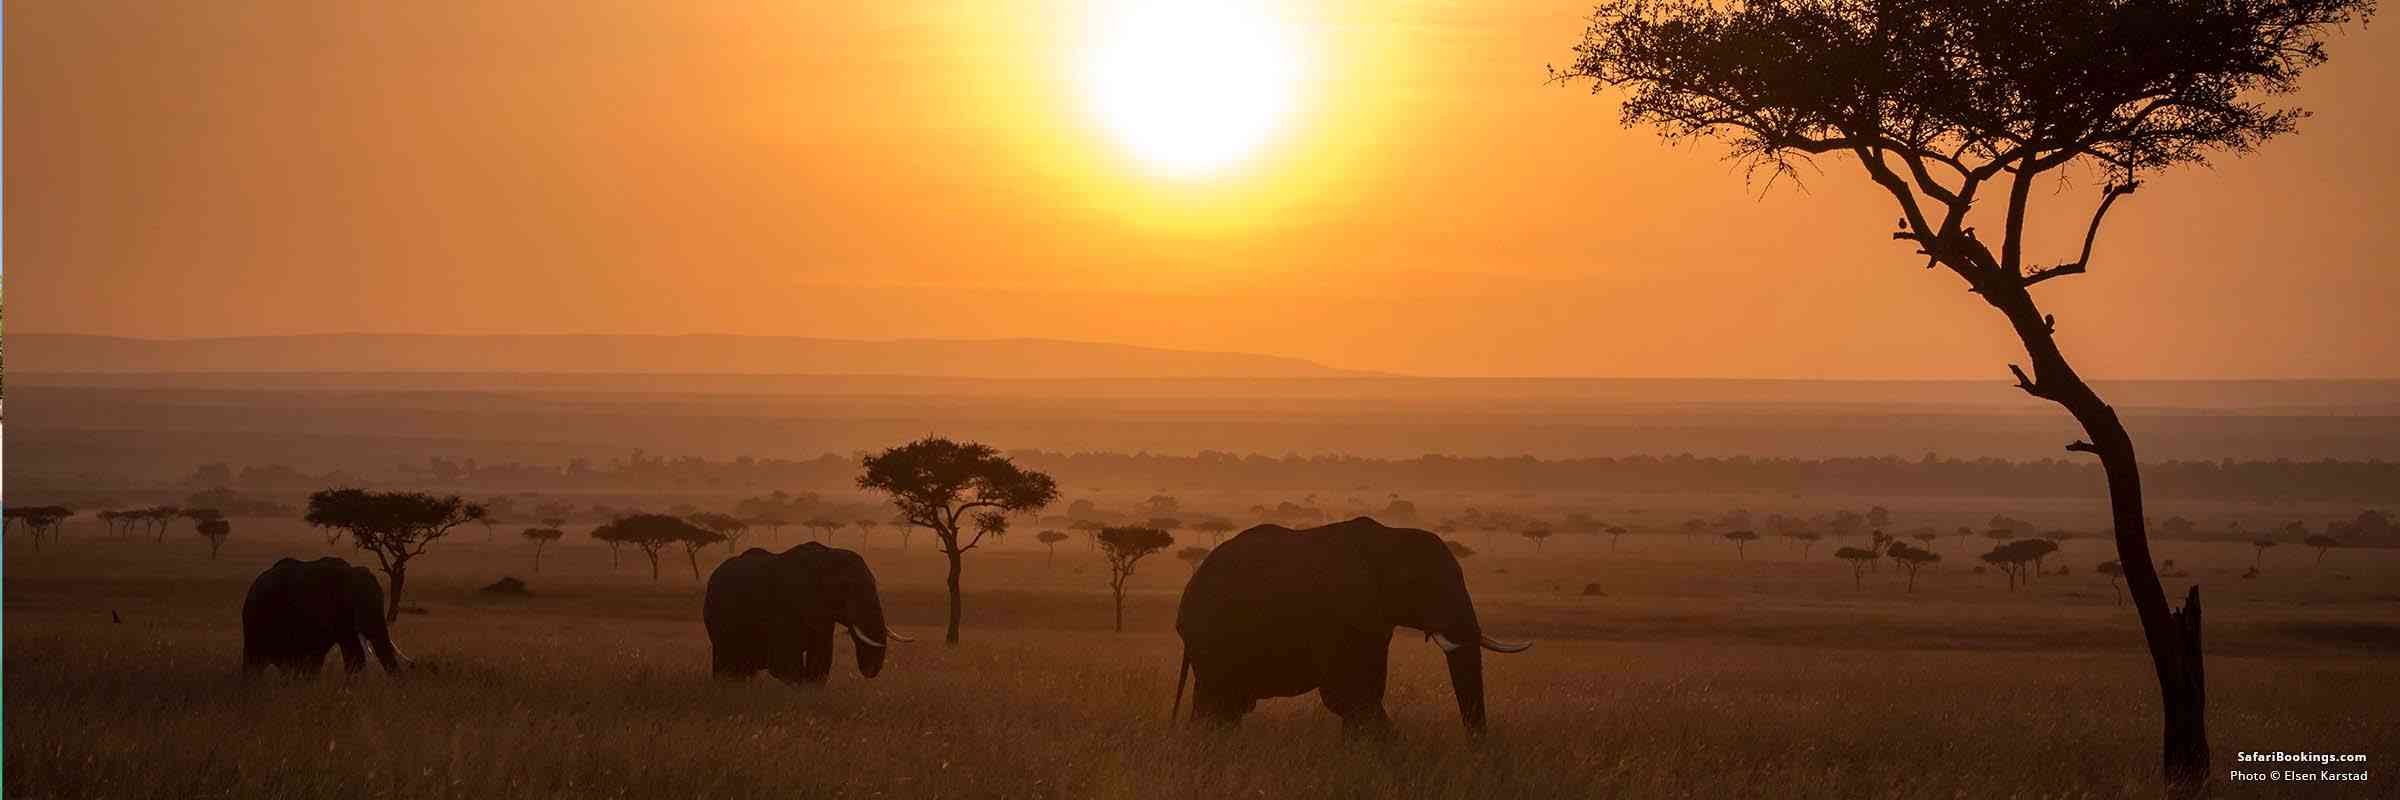 Kenya Vs Tanzania Which Is Better For An African Safari Safaribookings